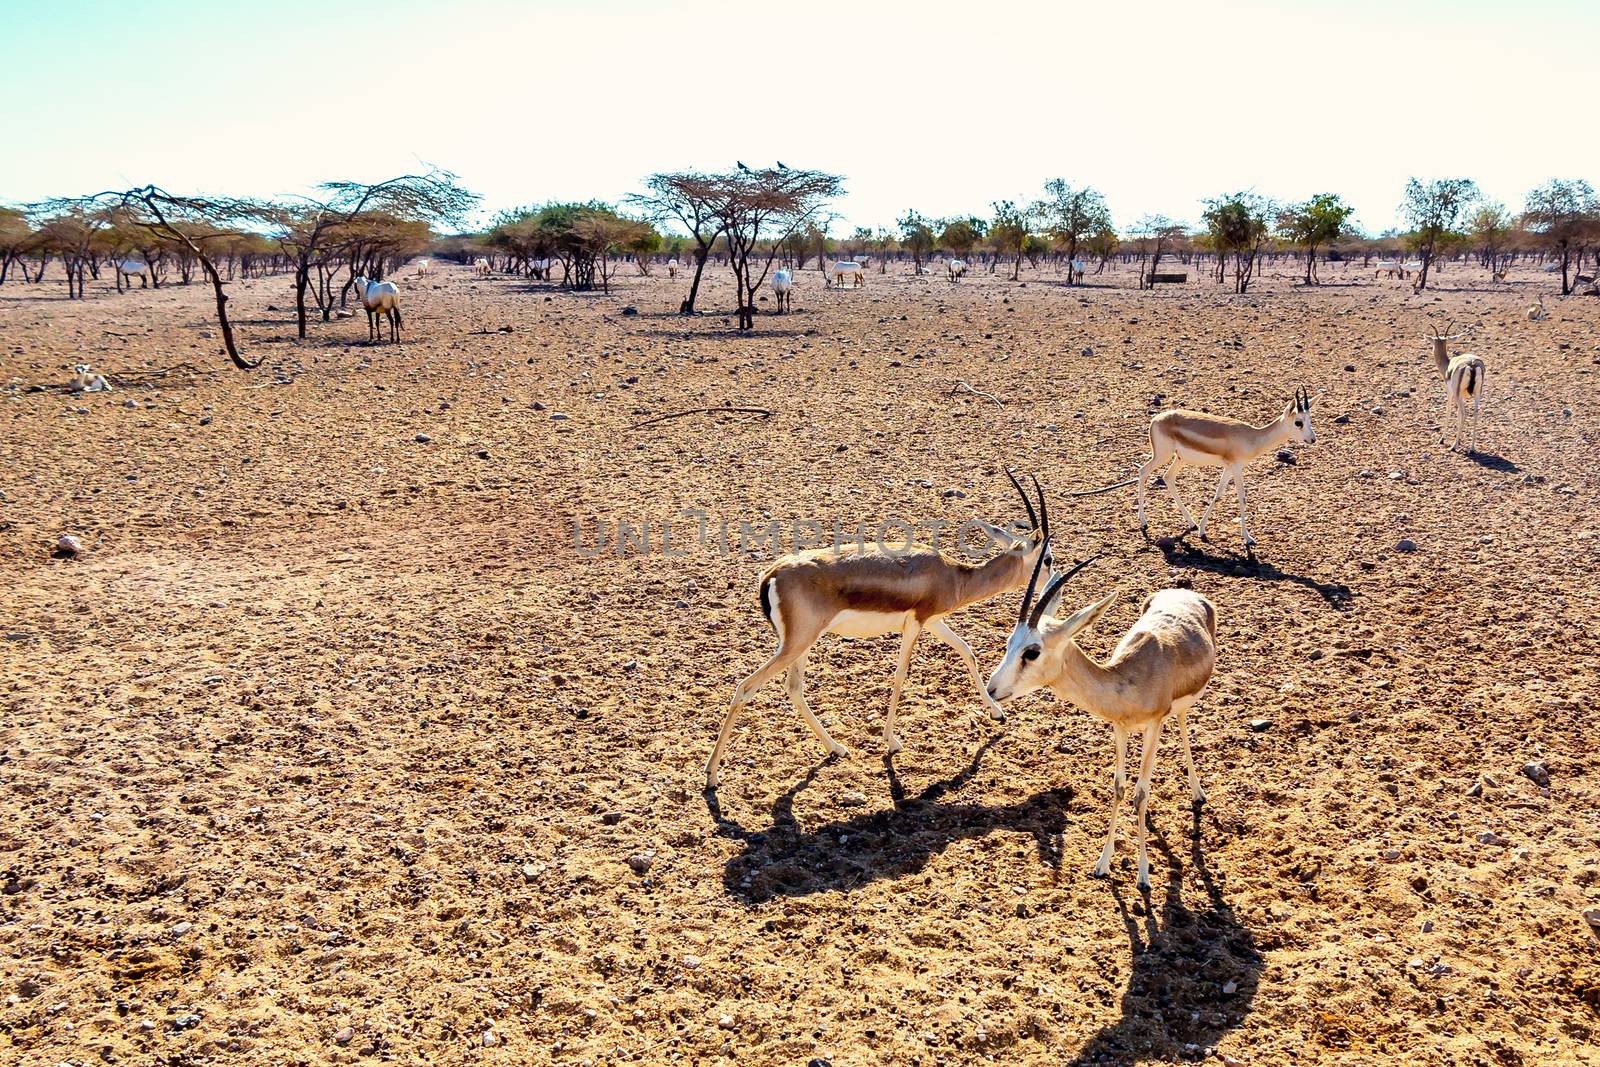 Antelope group in a safari park on the island of Sir Bani Yas, United Arab Emirates.